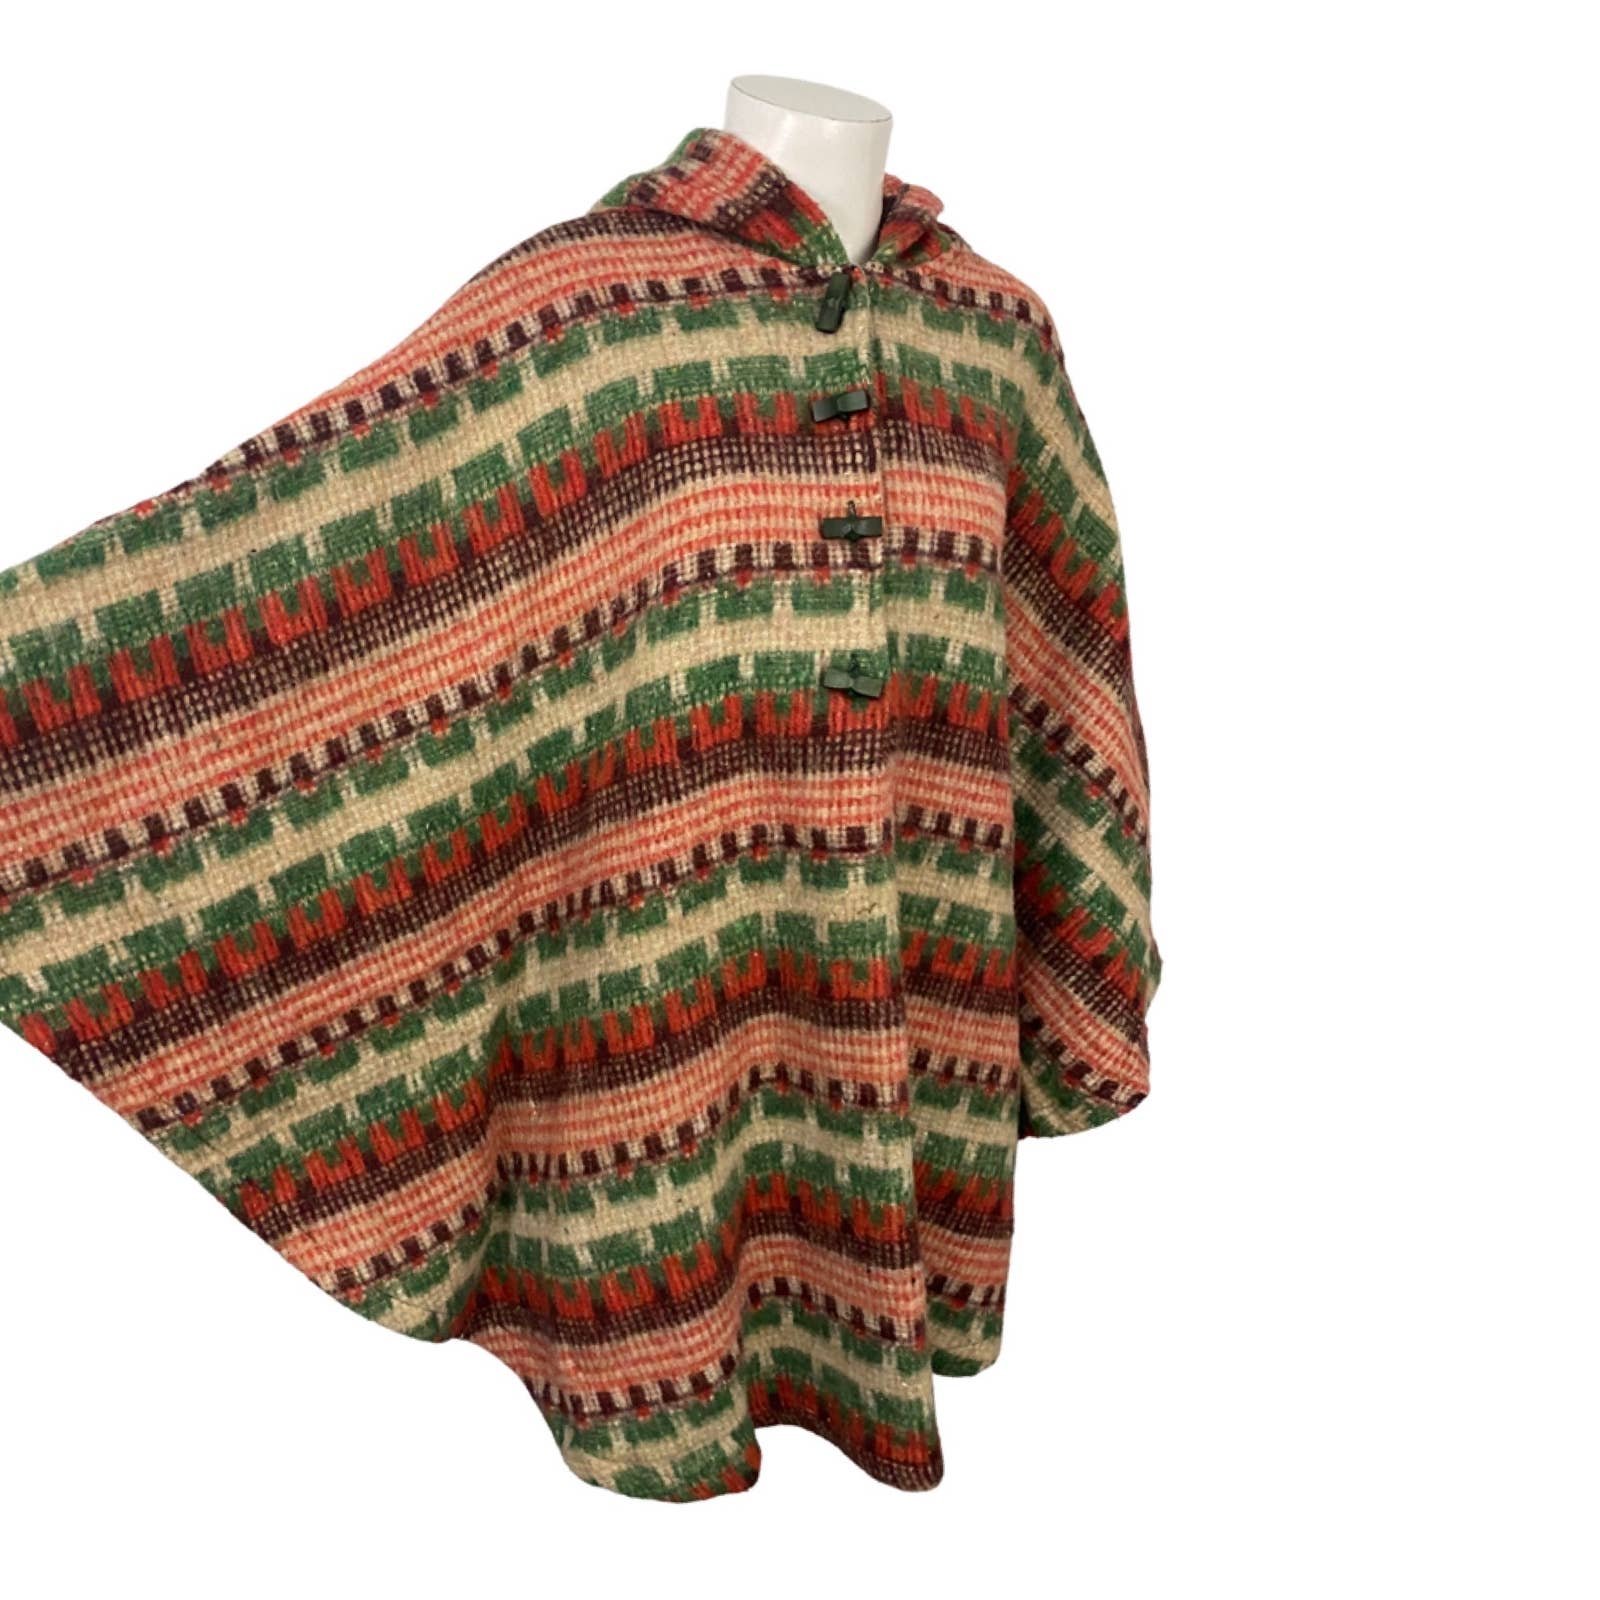 High quality 1970s Wool Blend Hooded Southwestern Print Poncho Cape Toggles / One Size * HxwOHFPUw US Sale